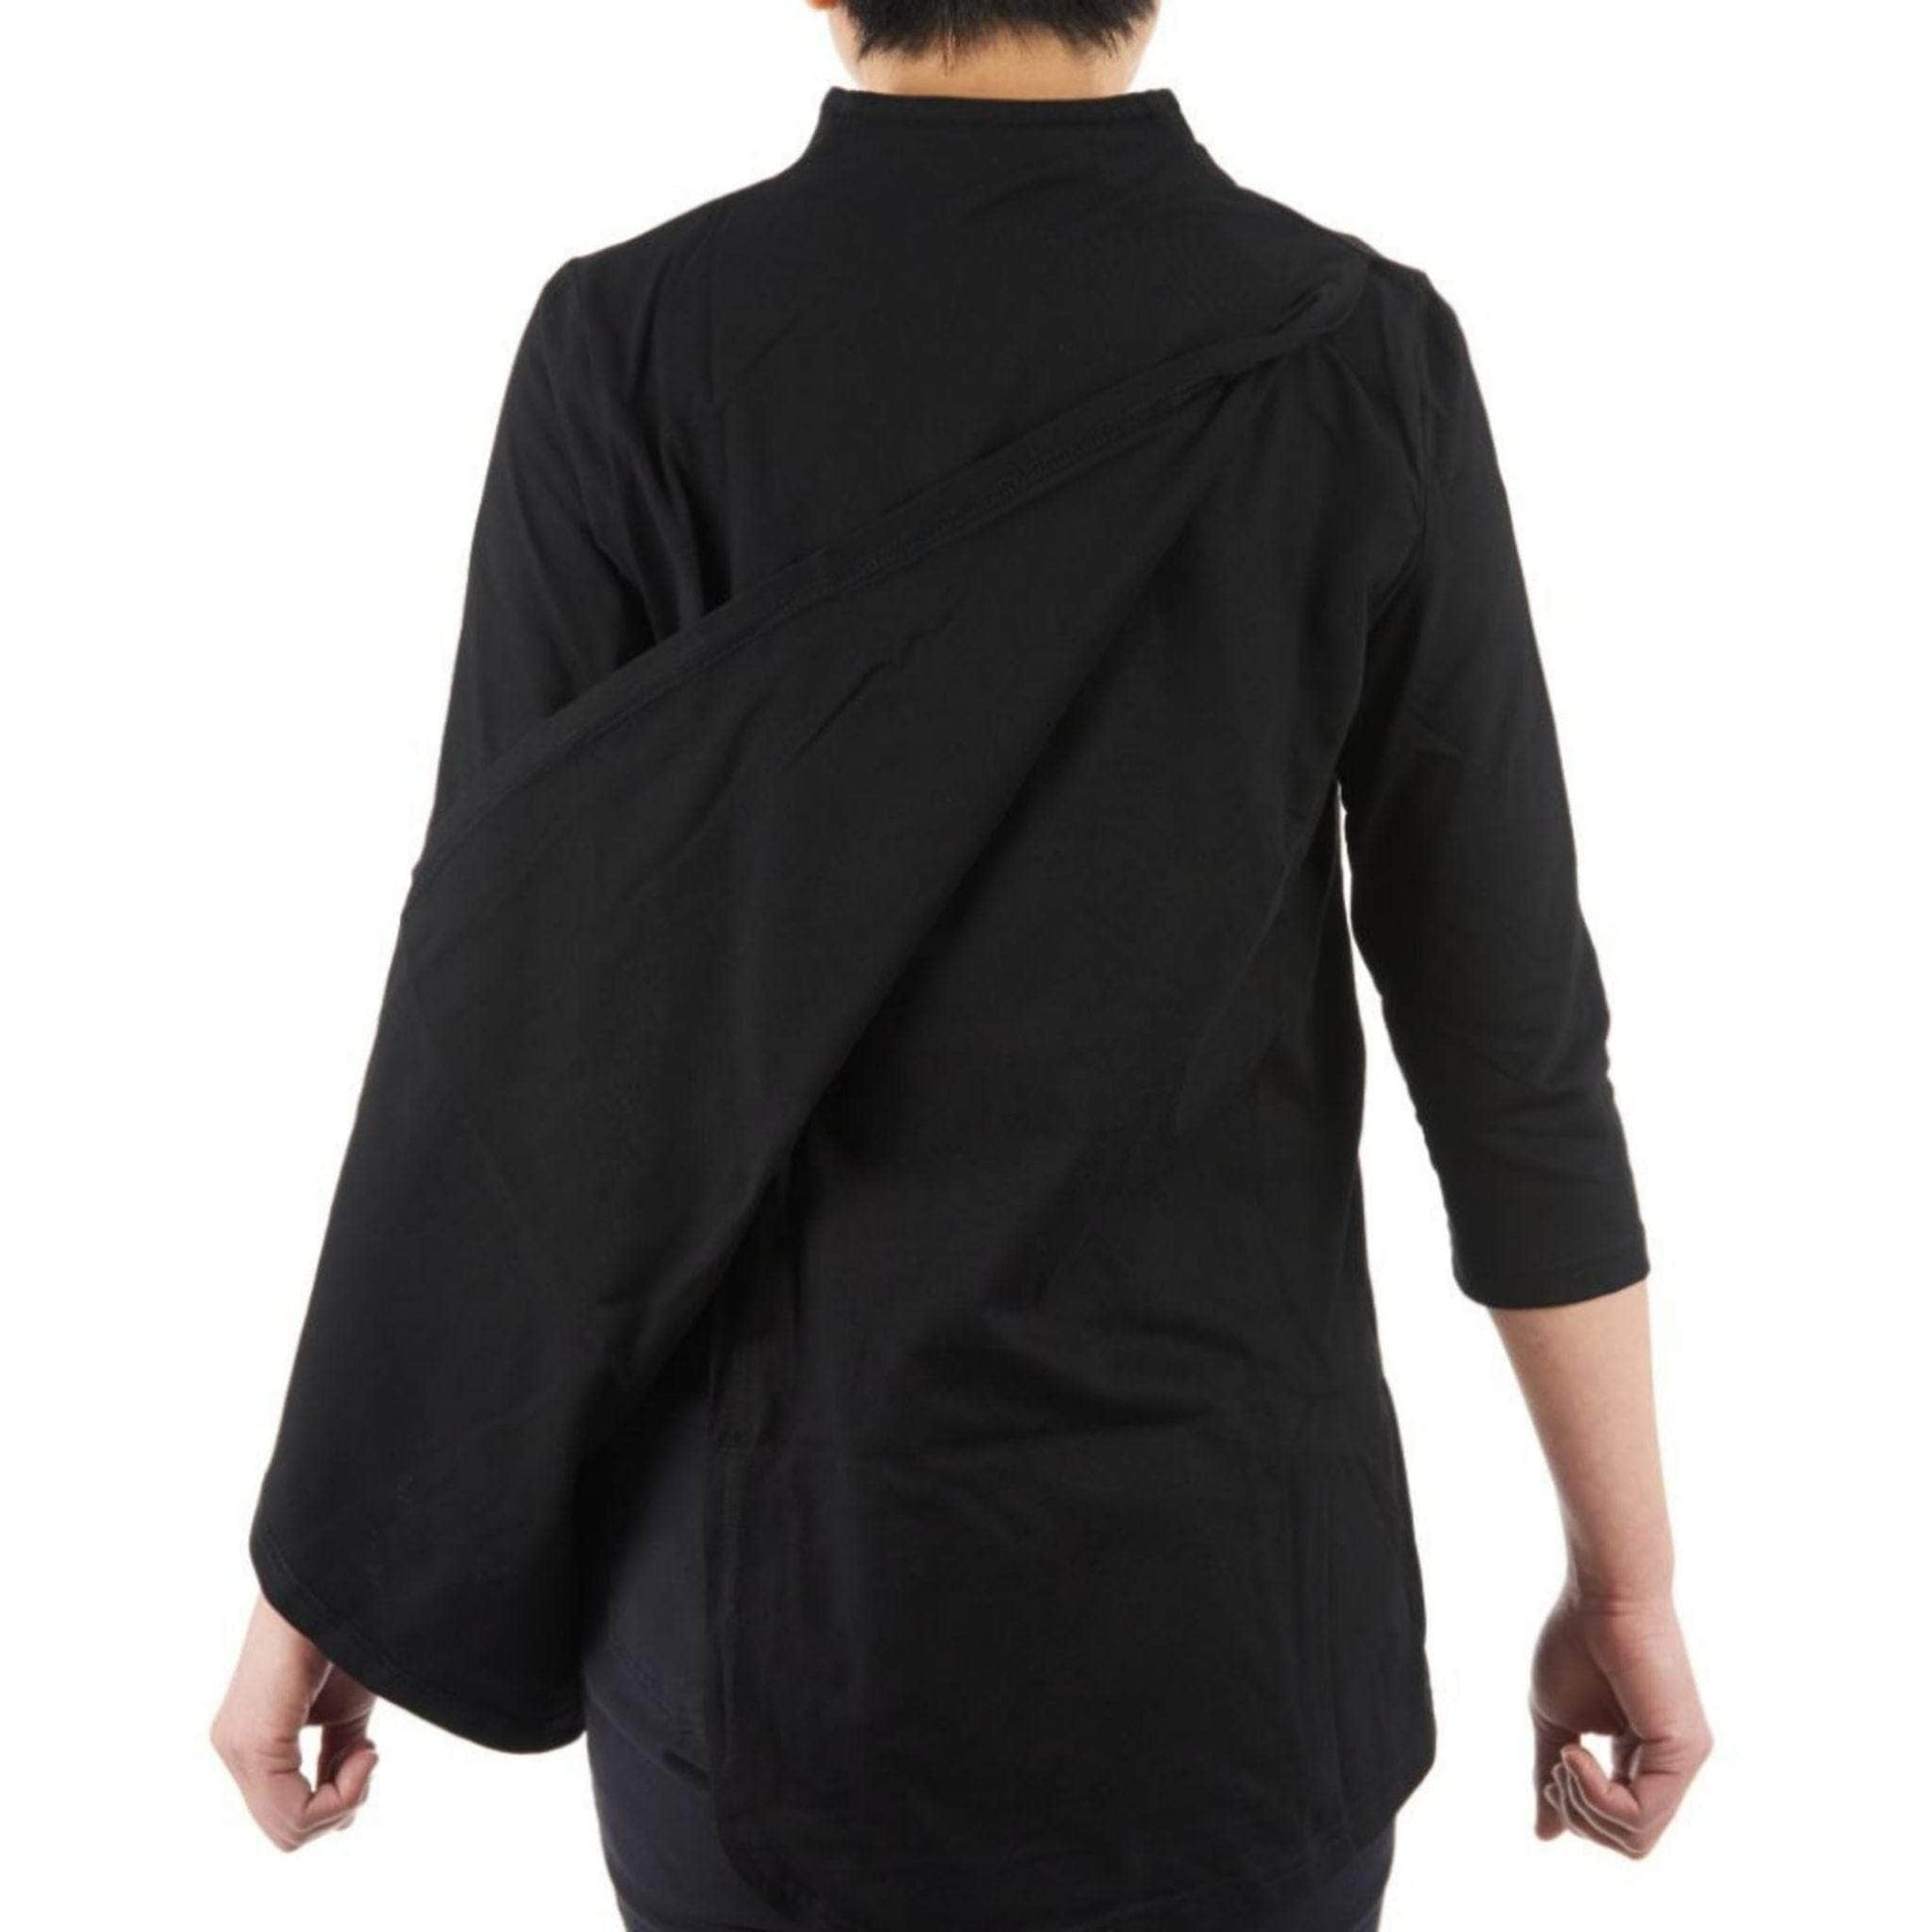 CC Women's Elizabeth 3/4 Sleeve V-Neck Top - Black - Caring Clothing